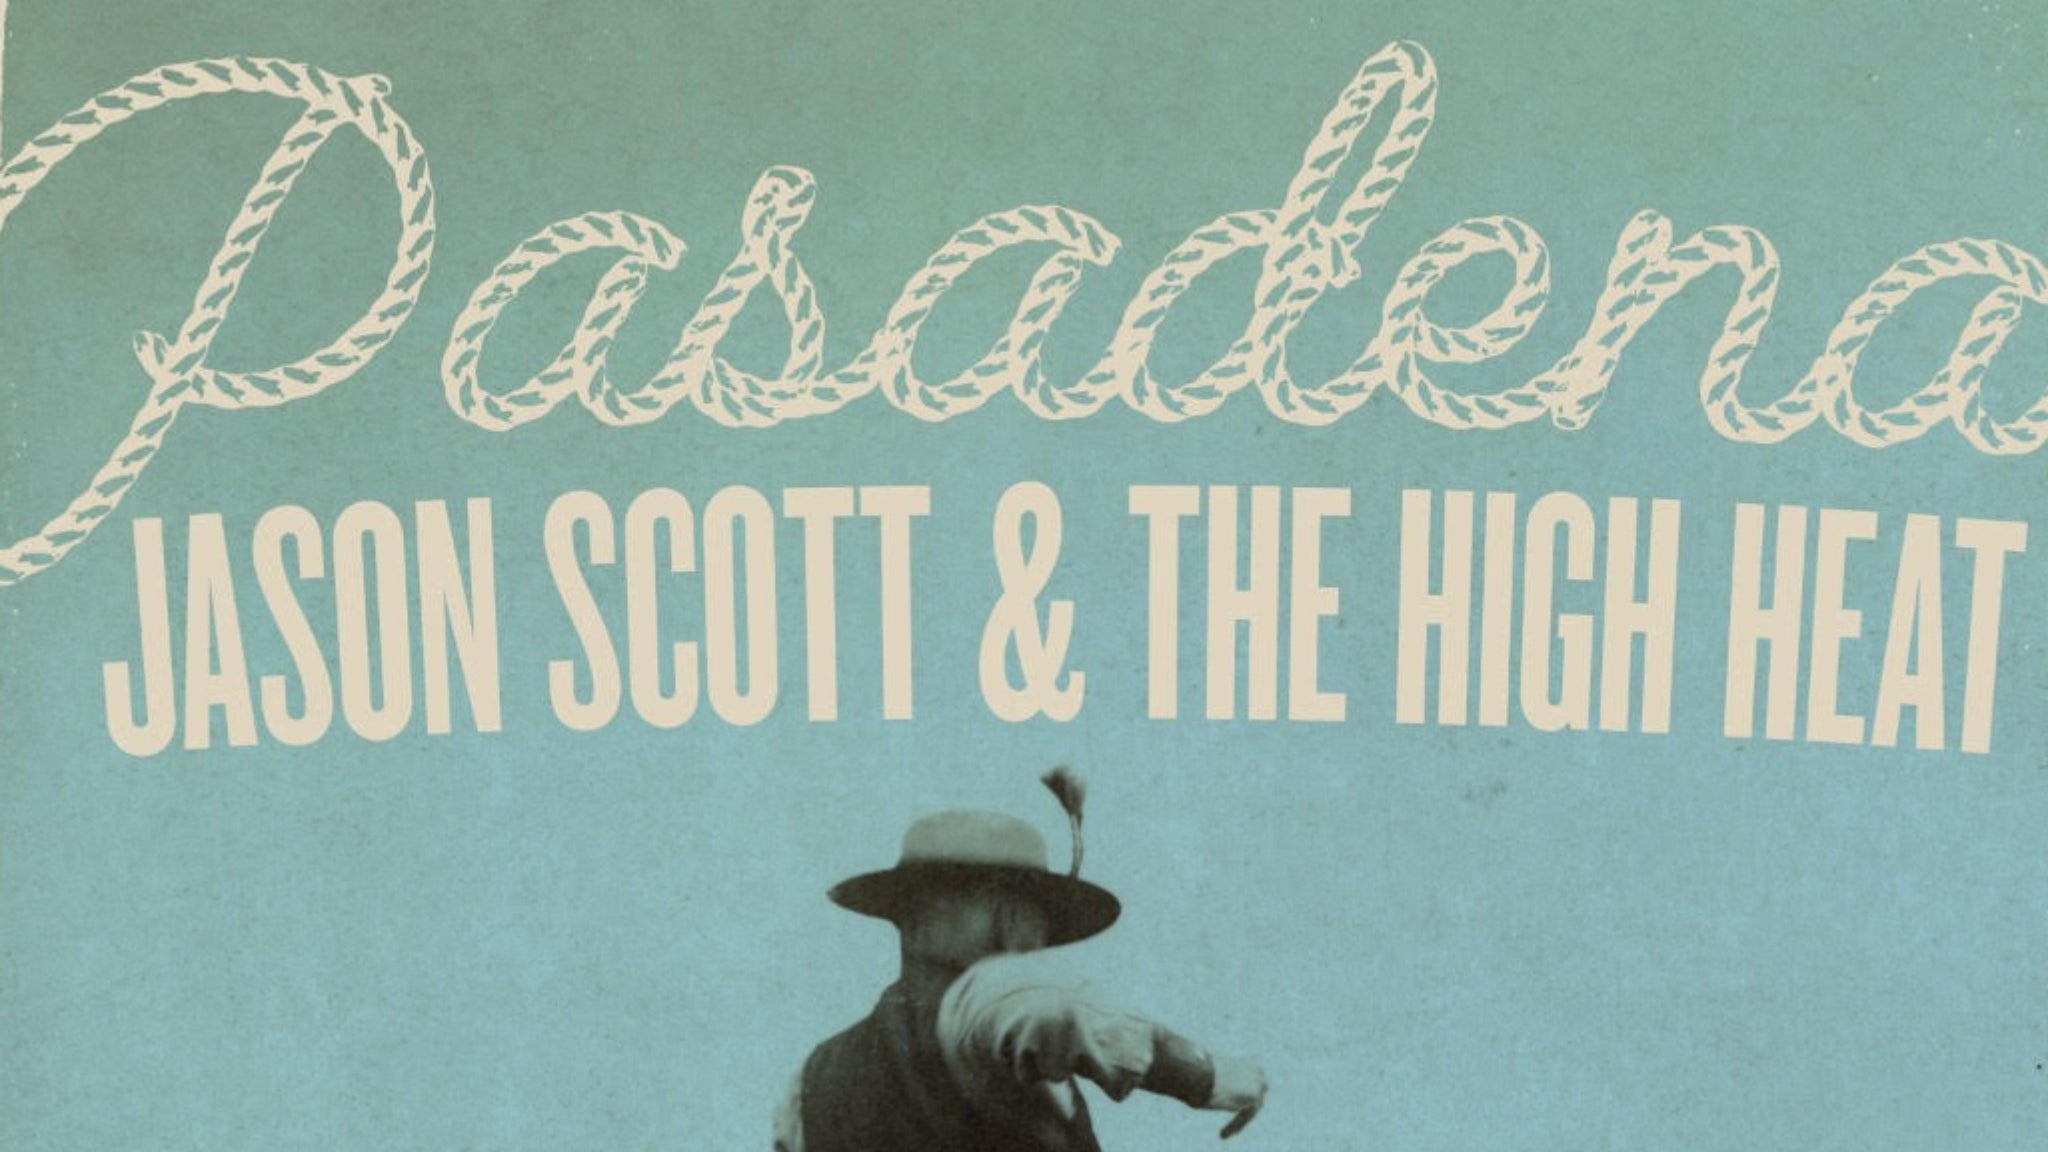 Pasadena and Jason Scott & the High Heat